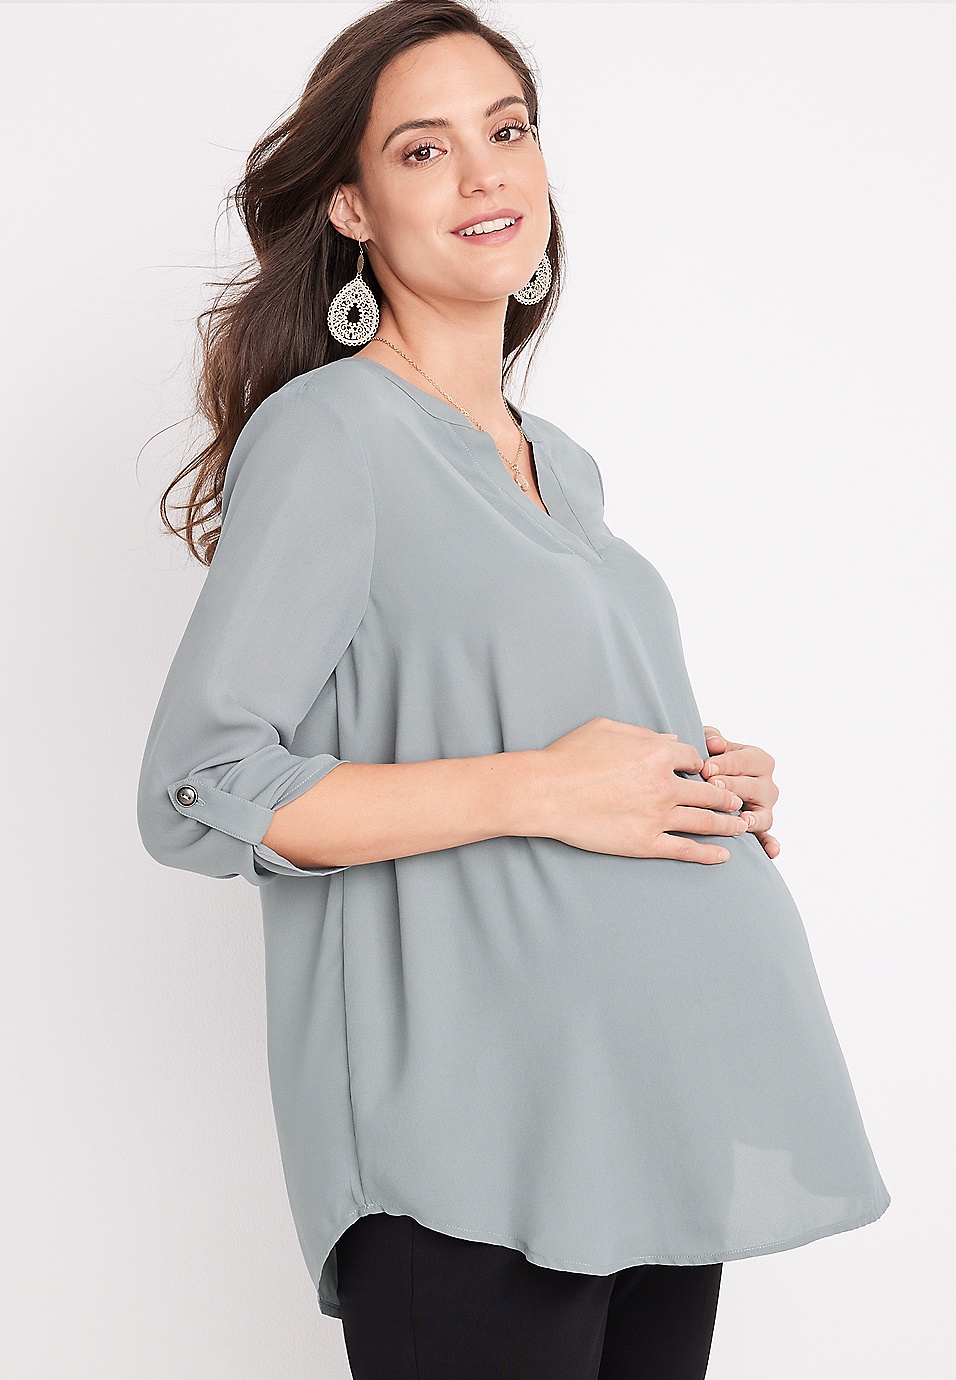 WAJCSHFS Plus Size Maternity Clothes Women's Maternity Print Short Sleeve  Tie Neck Flared Blouse Pregnancy Tops (Blue,S)